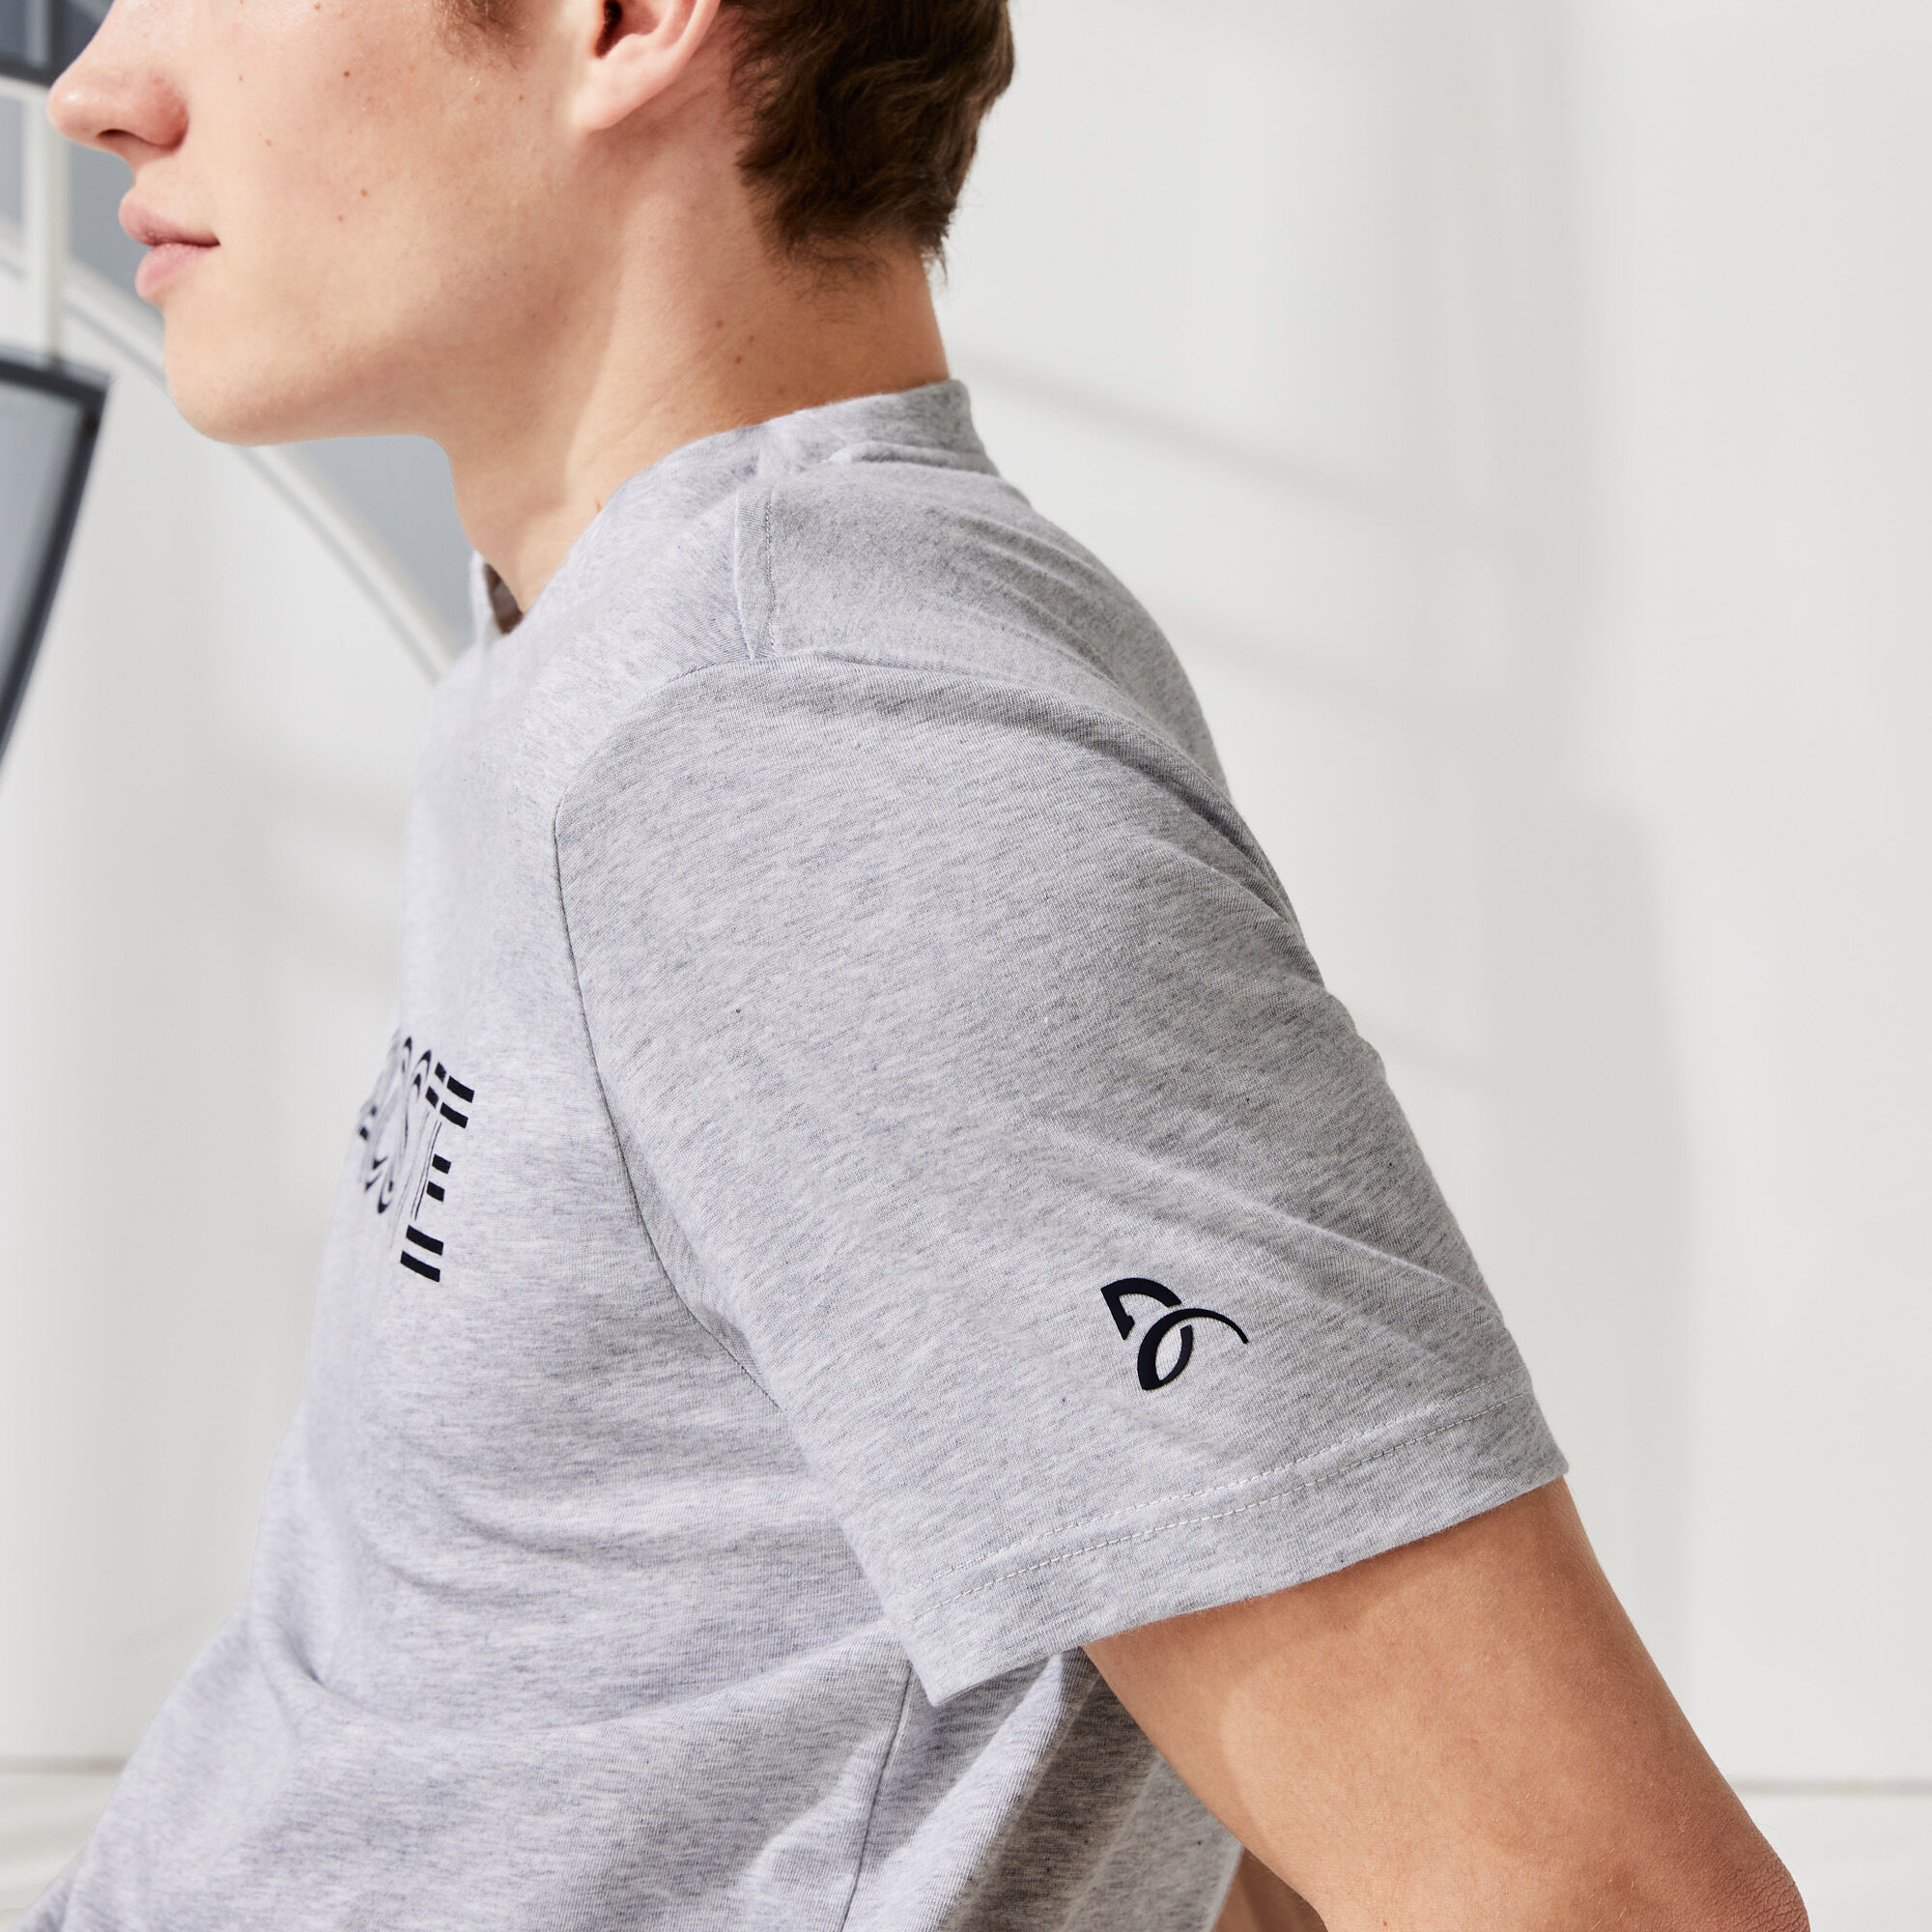 Men’s Lacoste SPORT x Novak Djokovic Breathable Print T-shirt